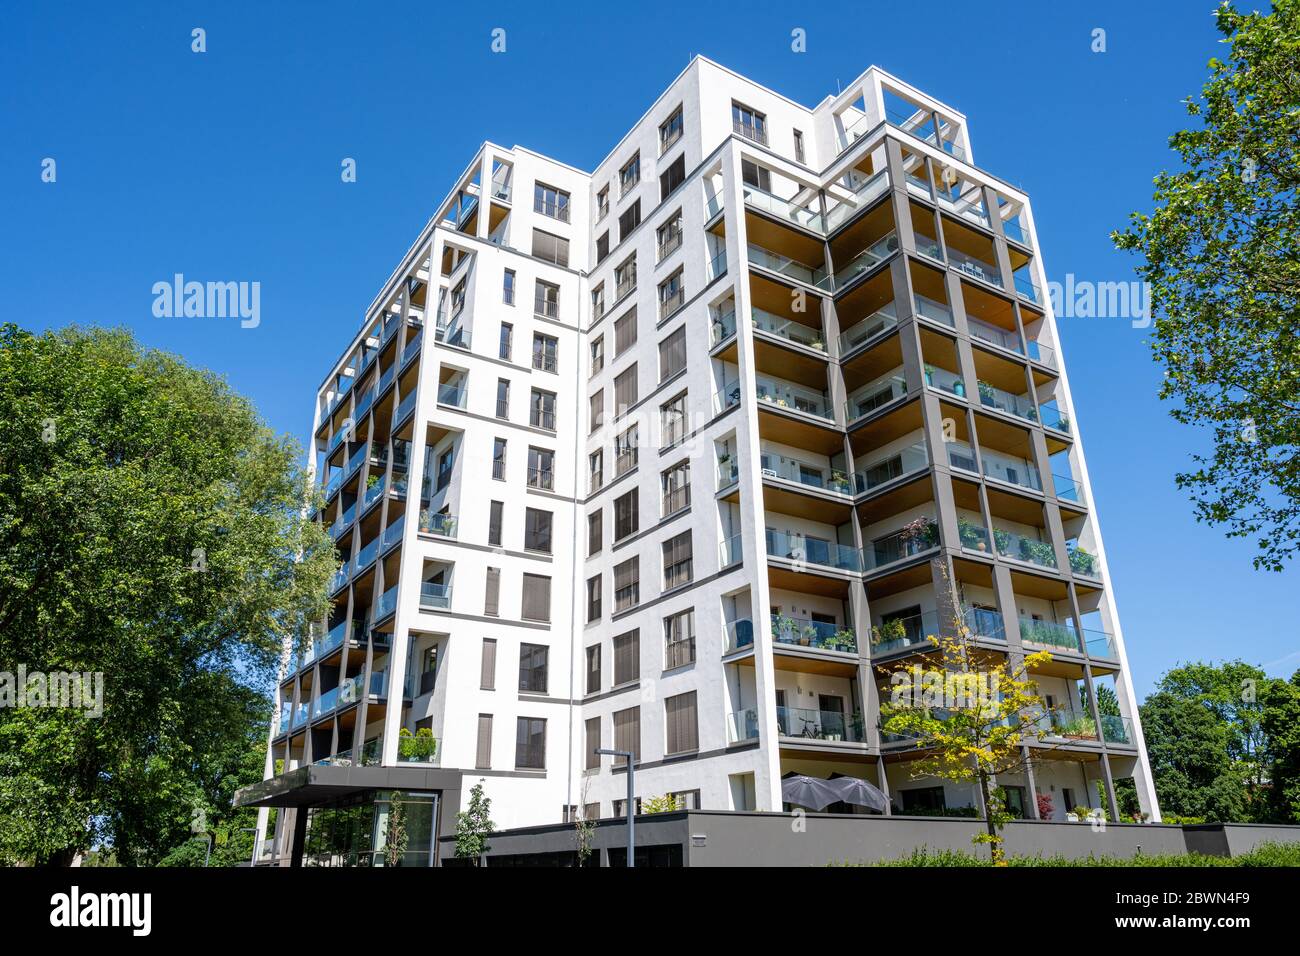 Big modern multi-apartment house seen in Berlin, Germany Stock Photo